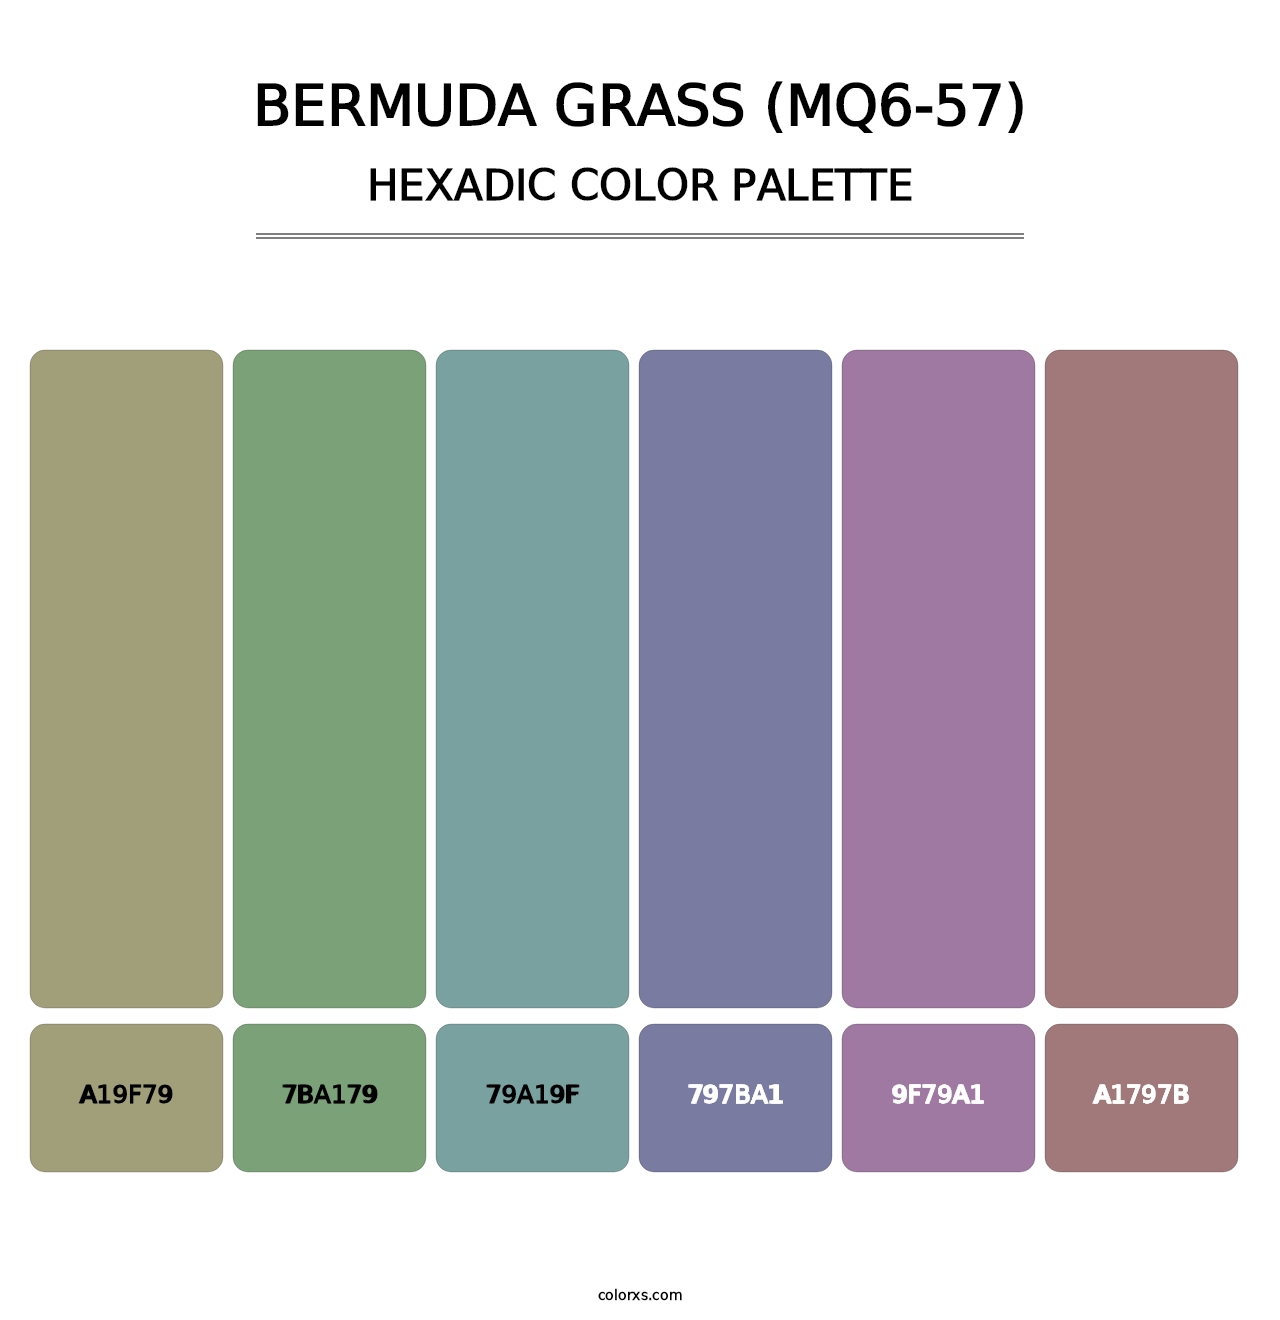 Bermuda Grass (MQ6-57) - Hexadic Color Palette